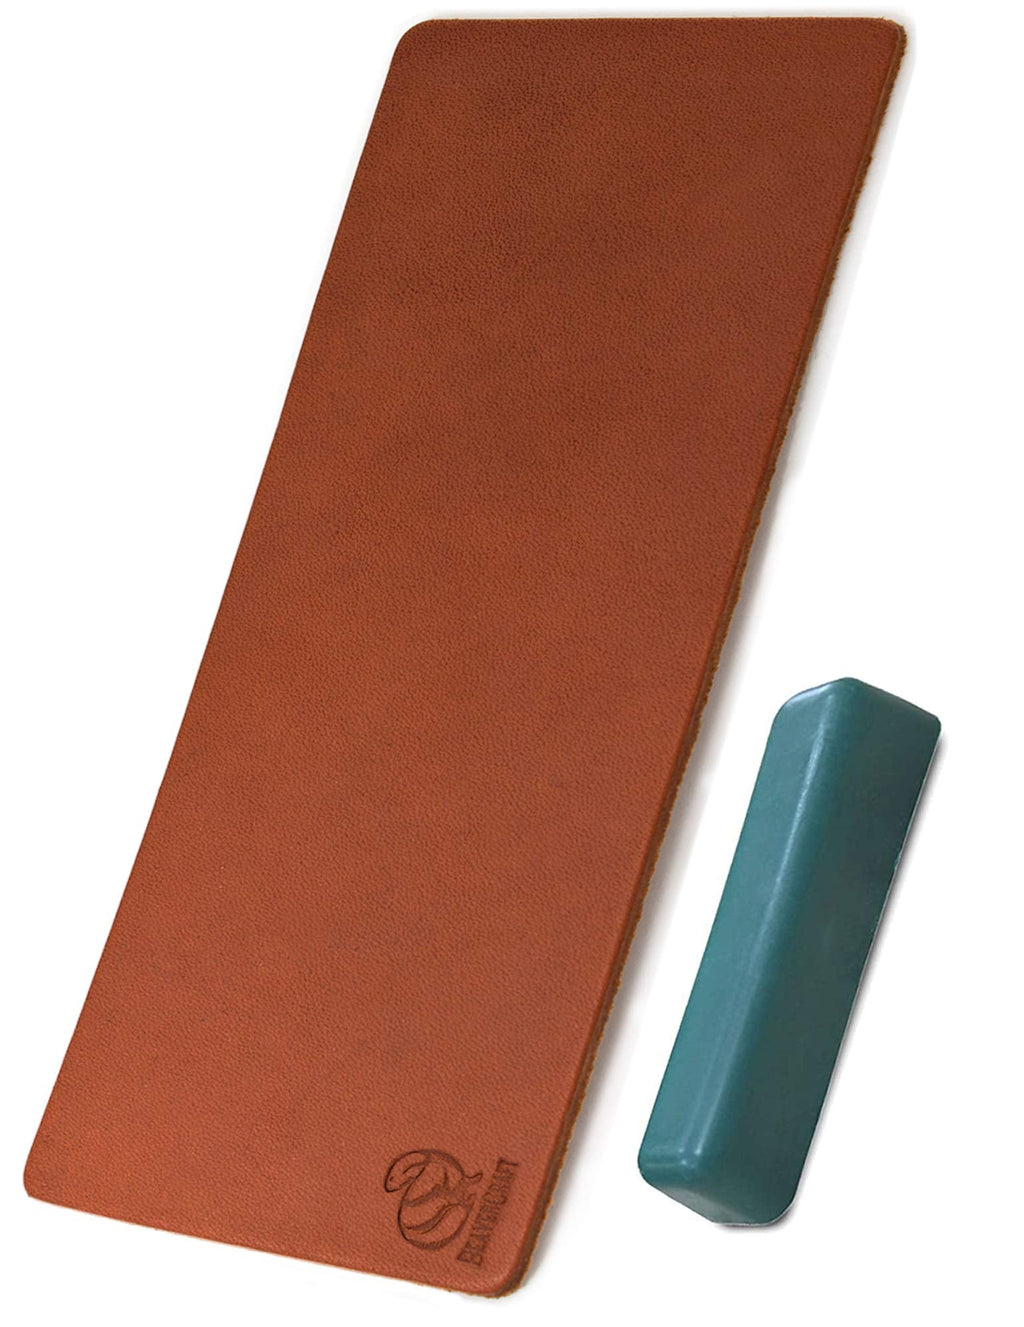 [Australia - AusPower] - BeaverCraft Stropping Leather Strop Kit for Sharpening Knife Strop LS2P1 - Leather Honing Strop 3 x 8 IN - Knives Sharpening with Stropping Set Polishing Compound - Double Sided 